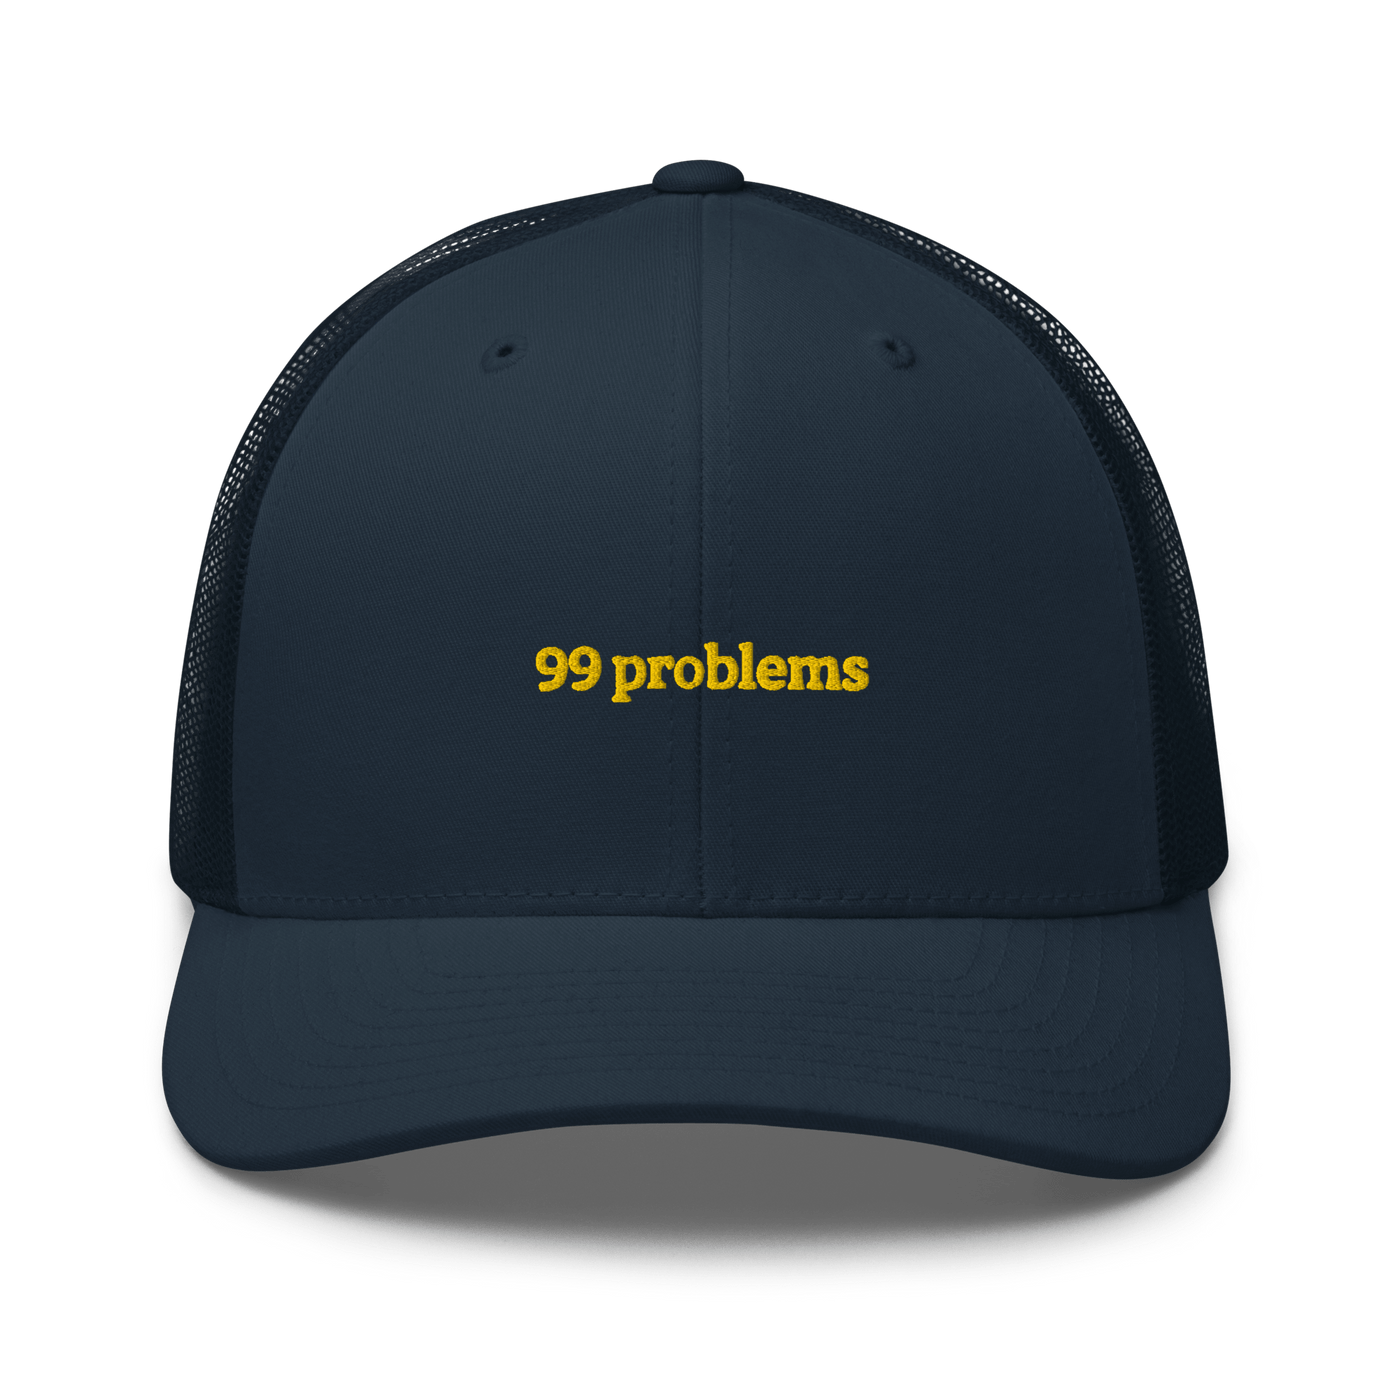 99 problems Trucker Cap - Navy - - Just Another Cap Store